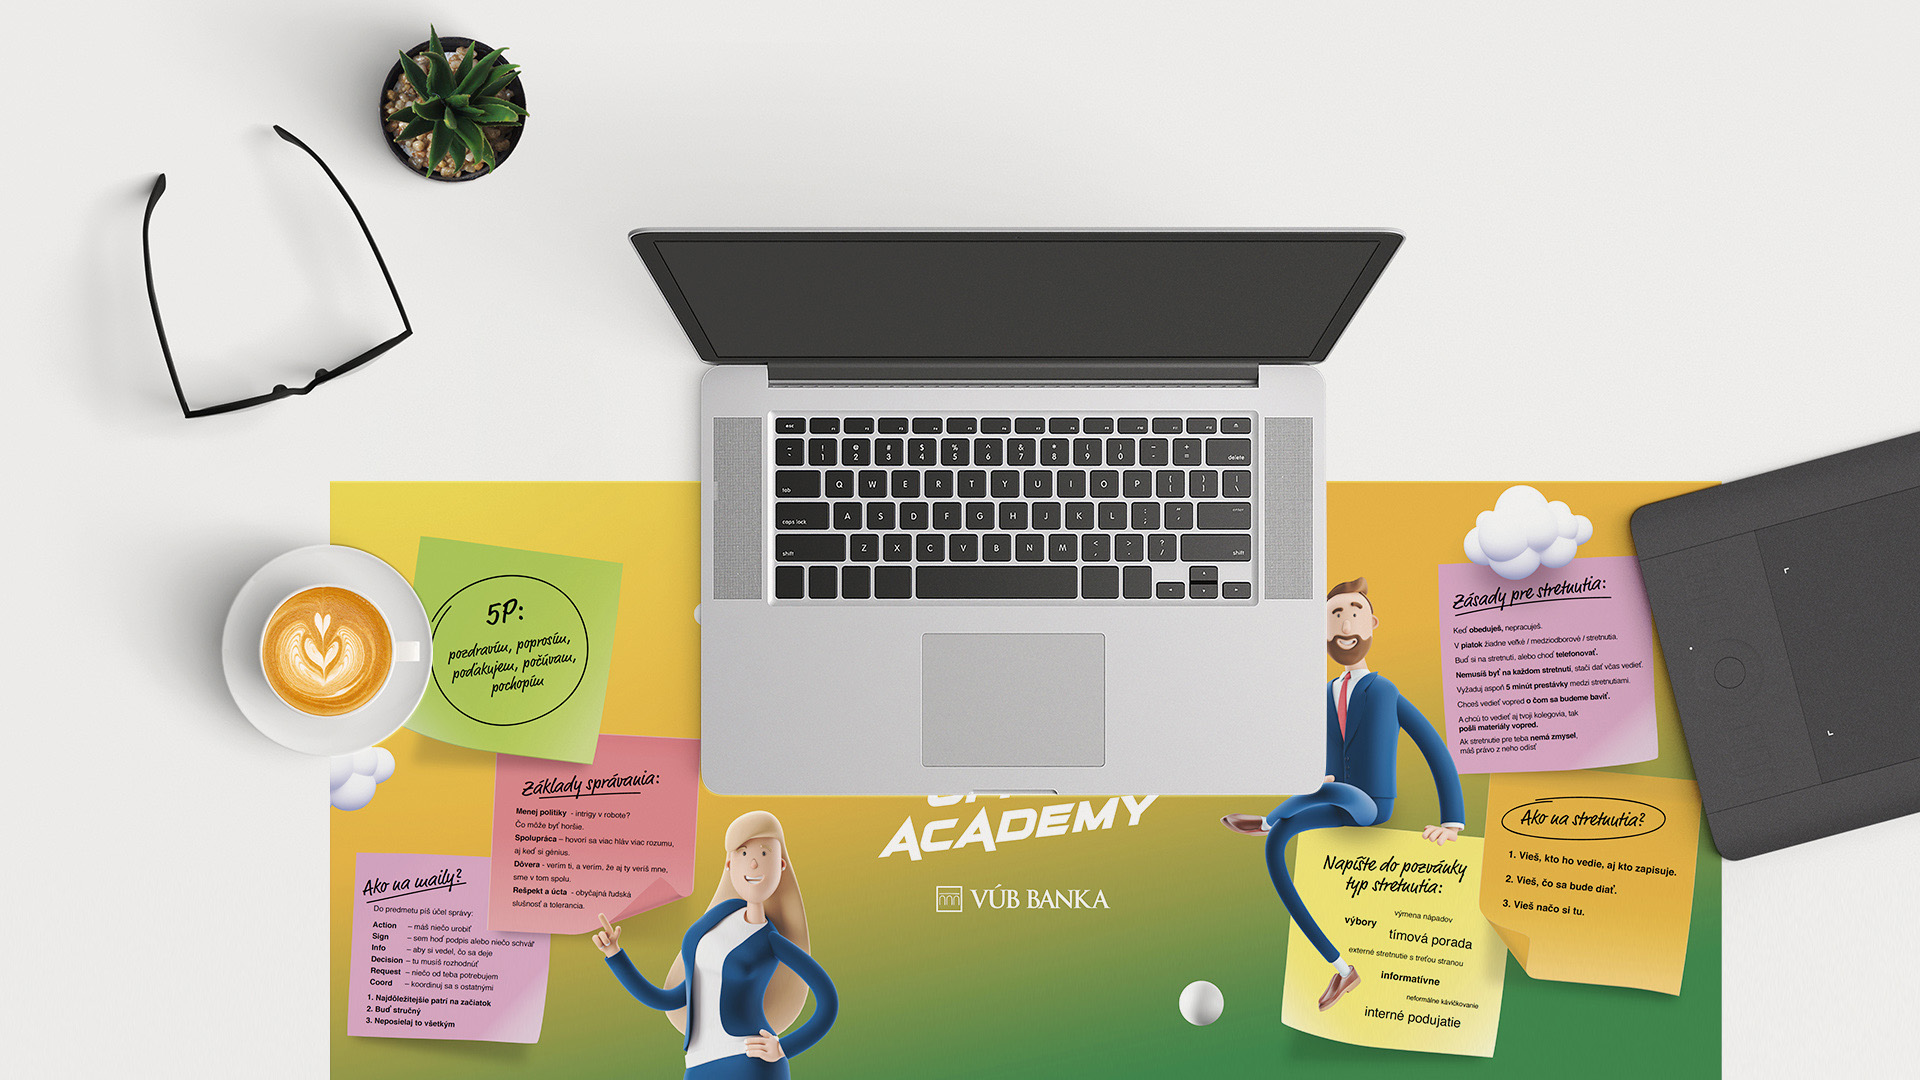 VÚB – Smart Office Academy